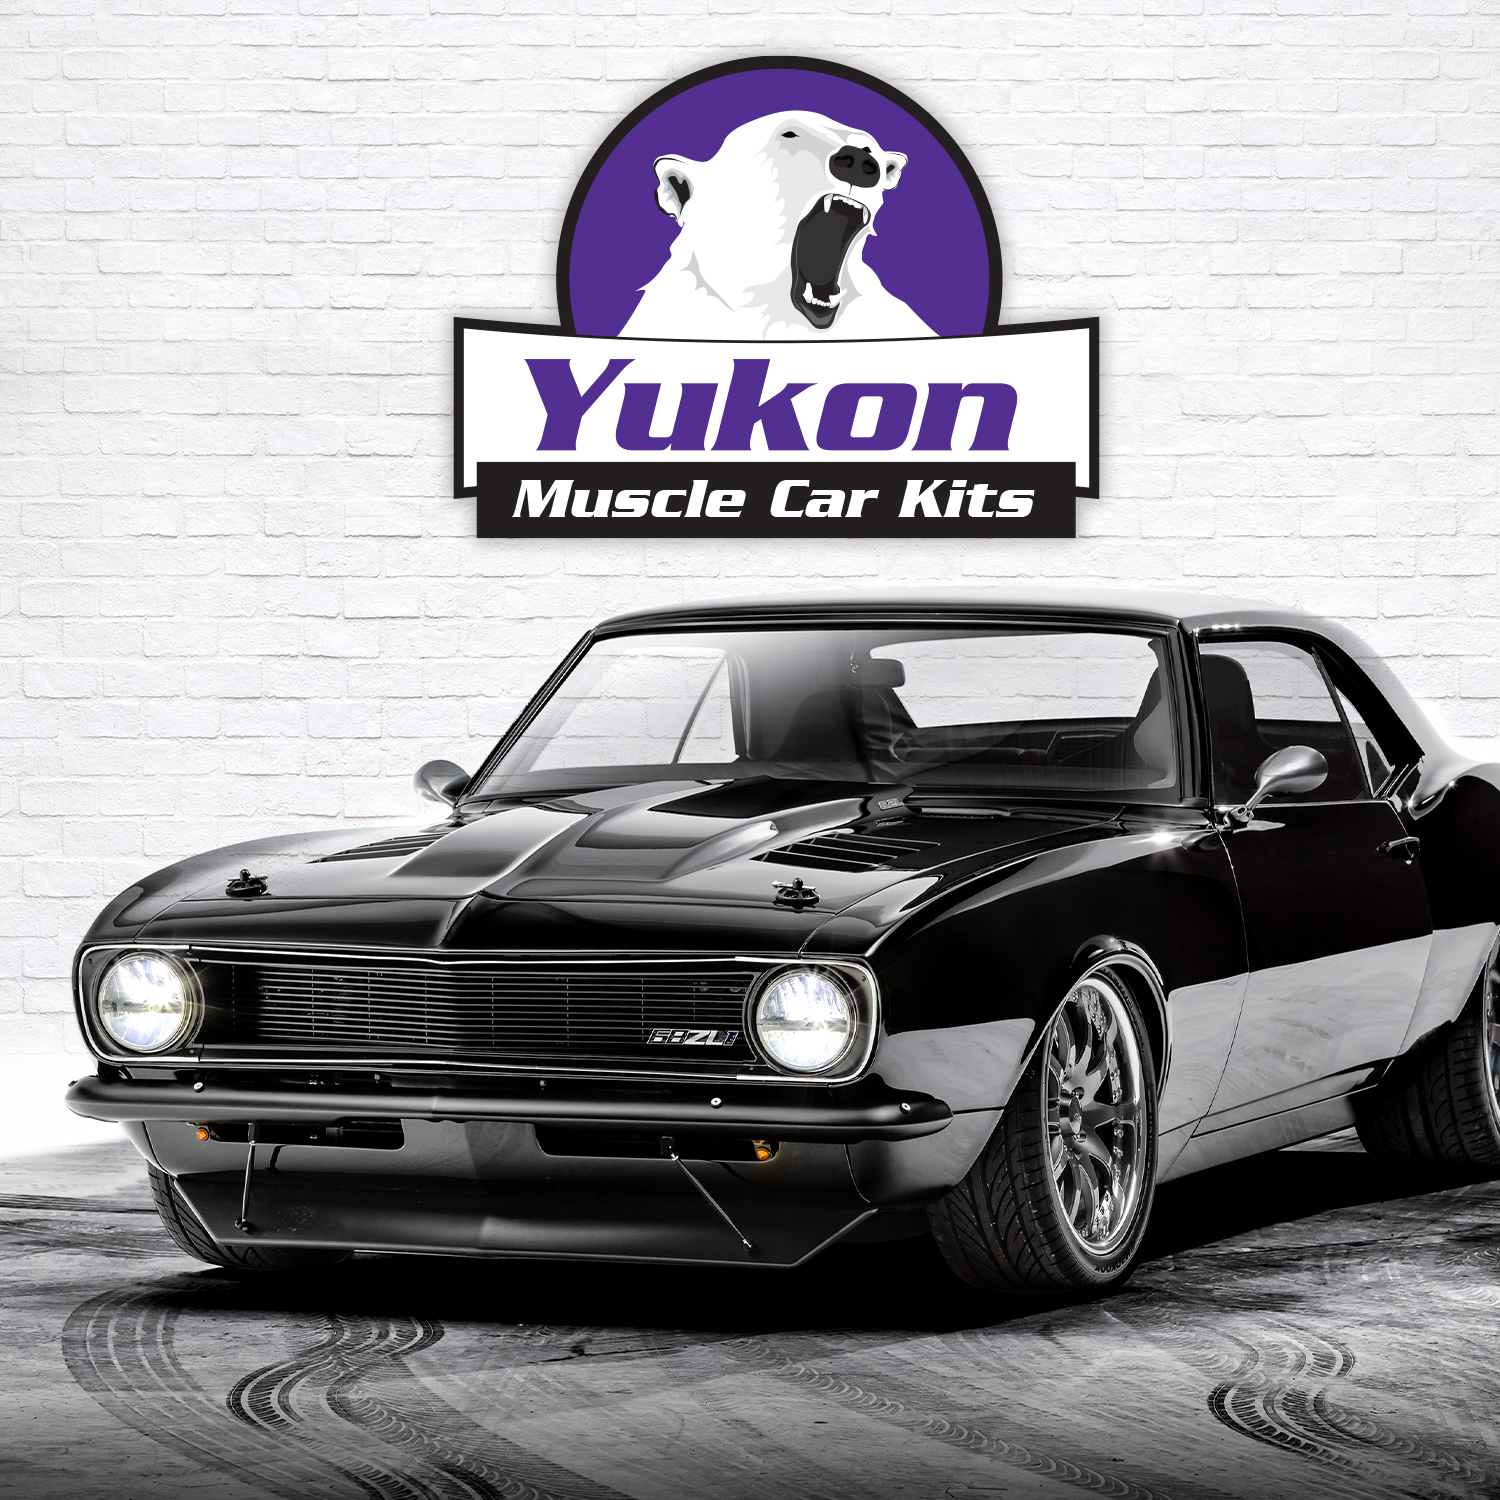 Yukon Muscle Car Limited Slip & Re-Gear Kit for Ford 8”, 25 spline, 4.11 ratio 